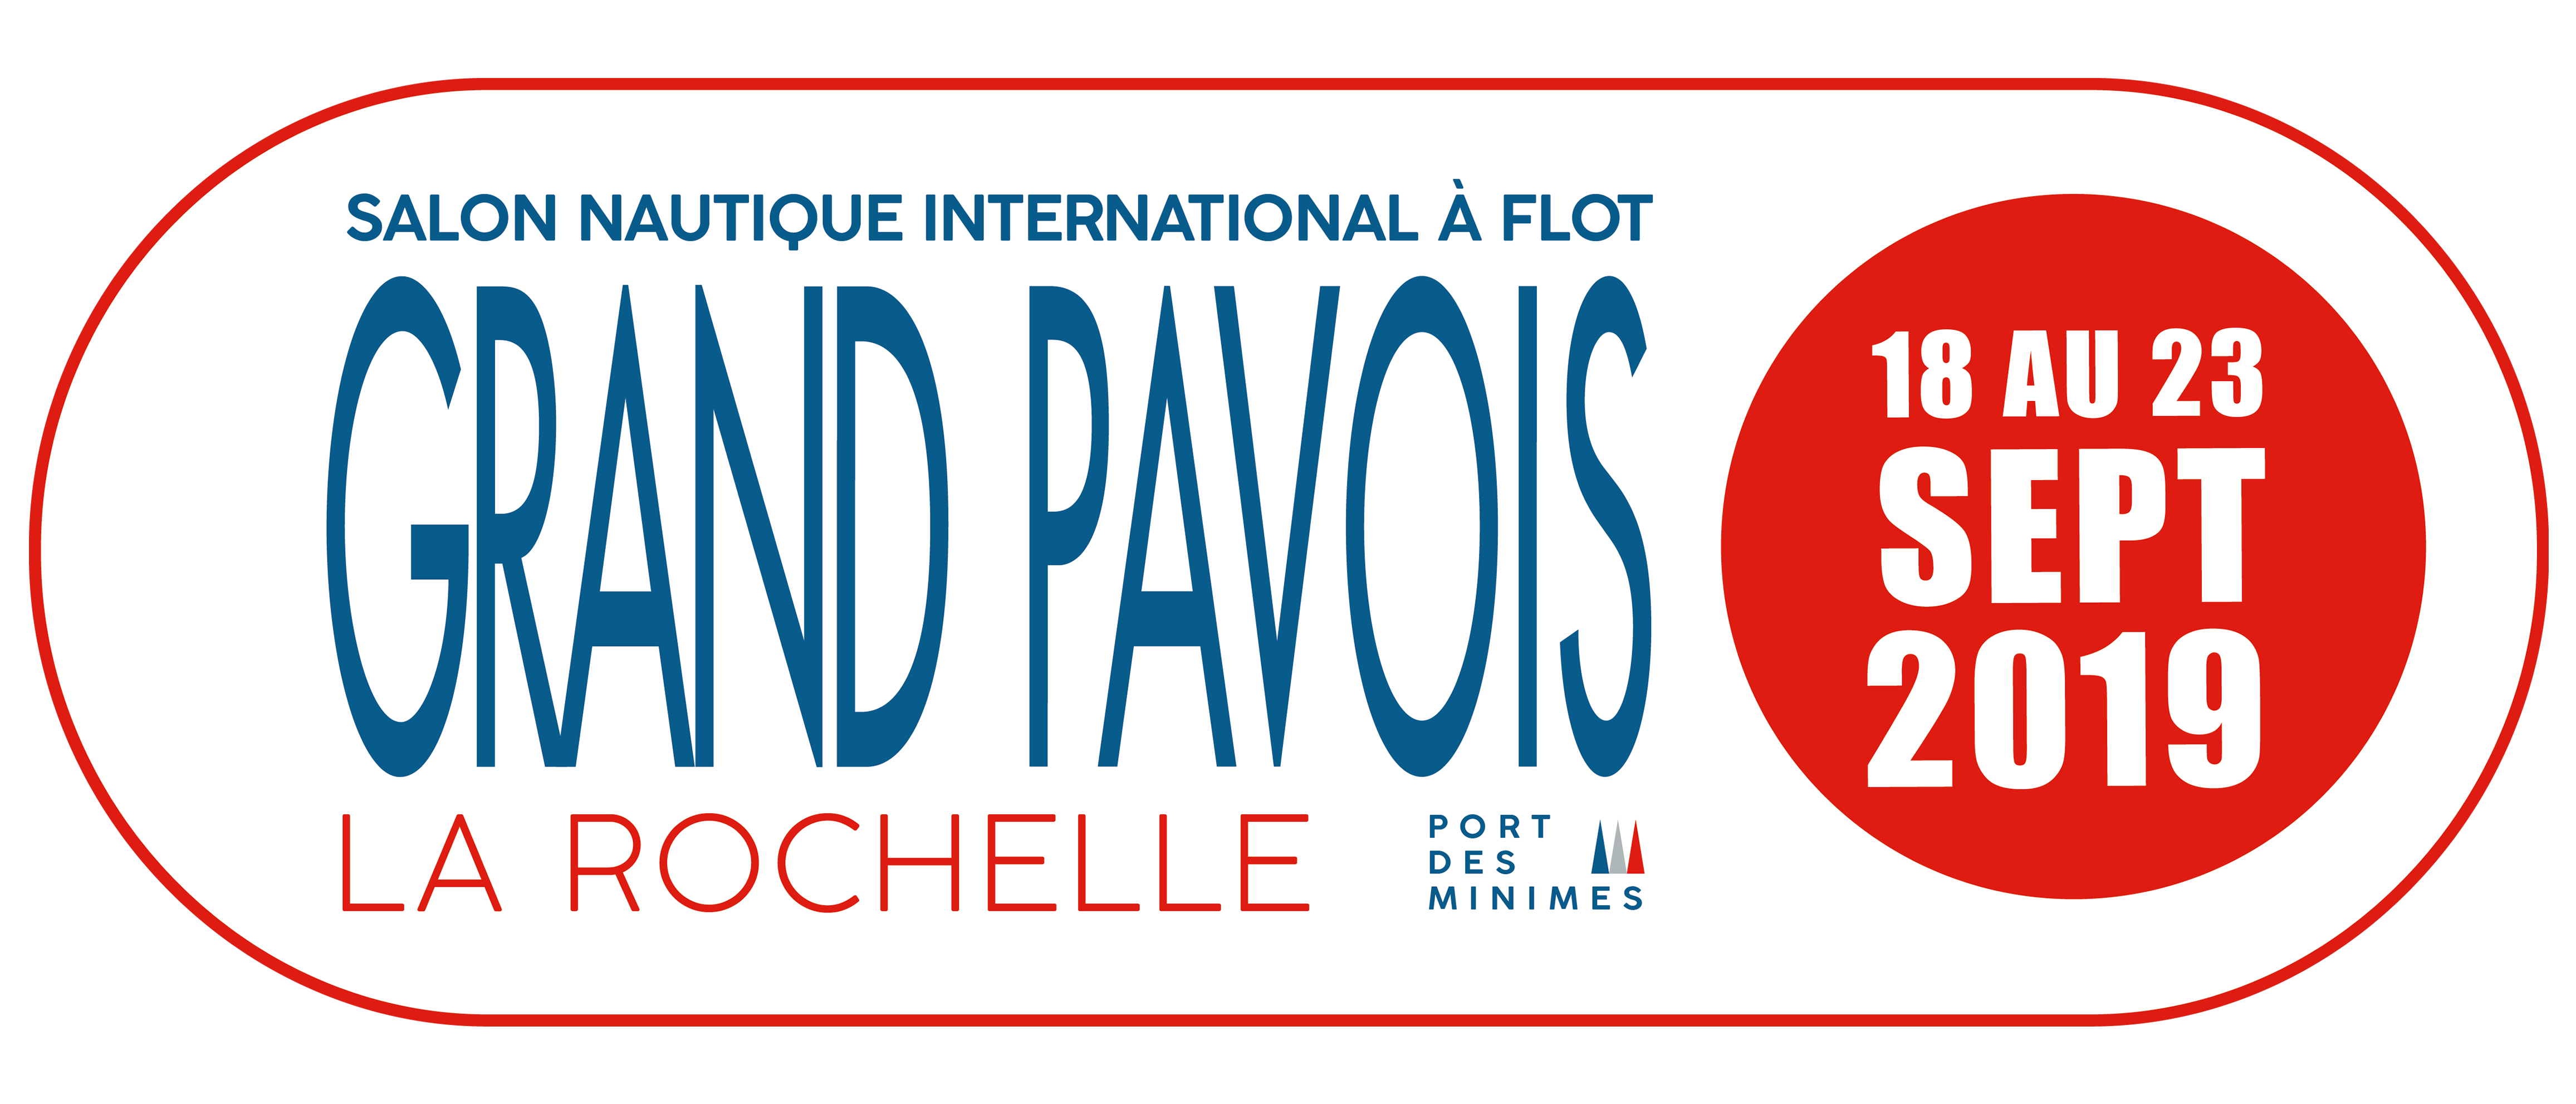 Grand Pavois - La Rochelle boat show 2019